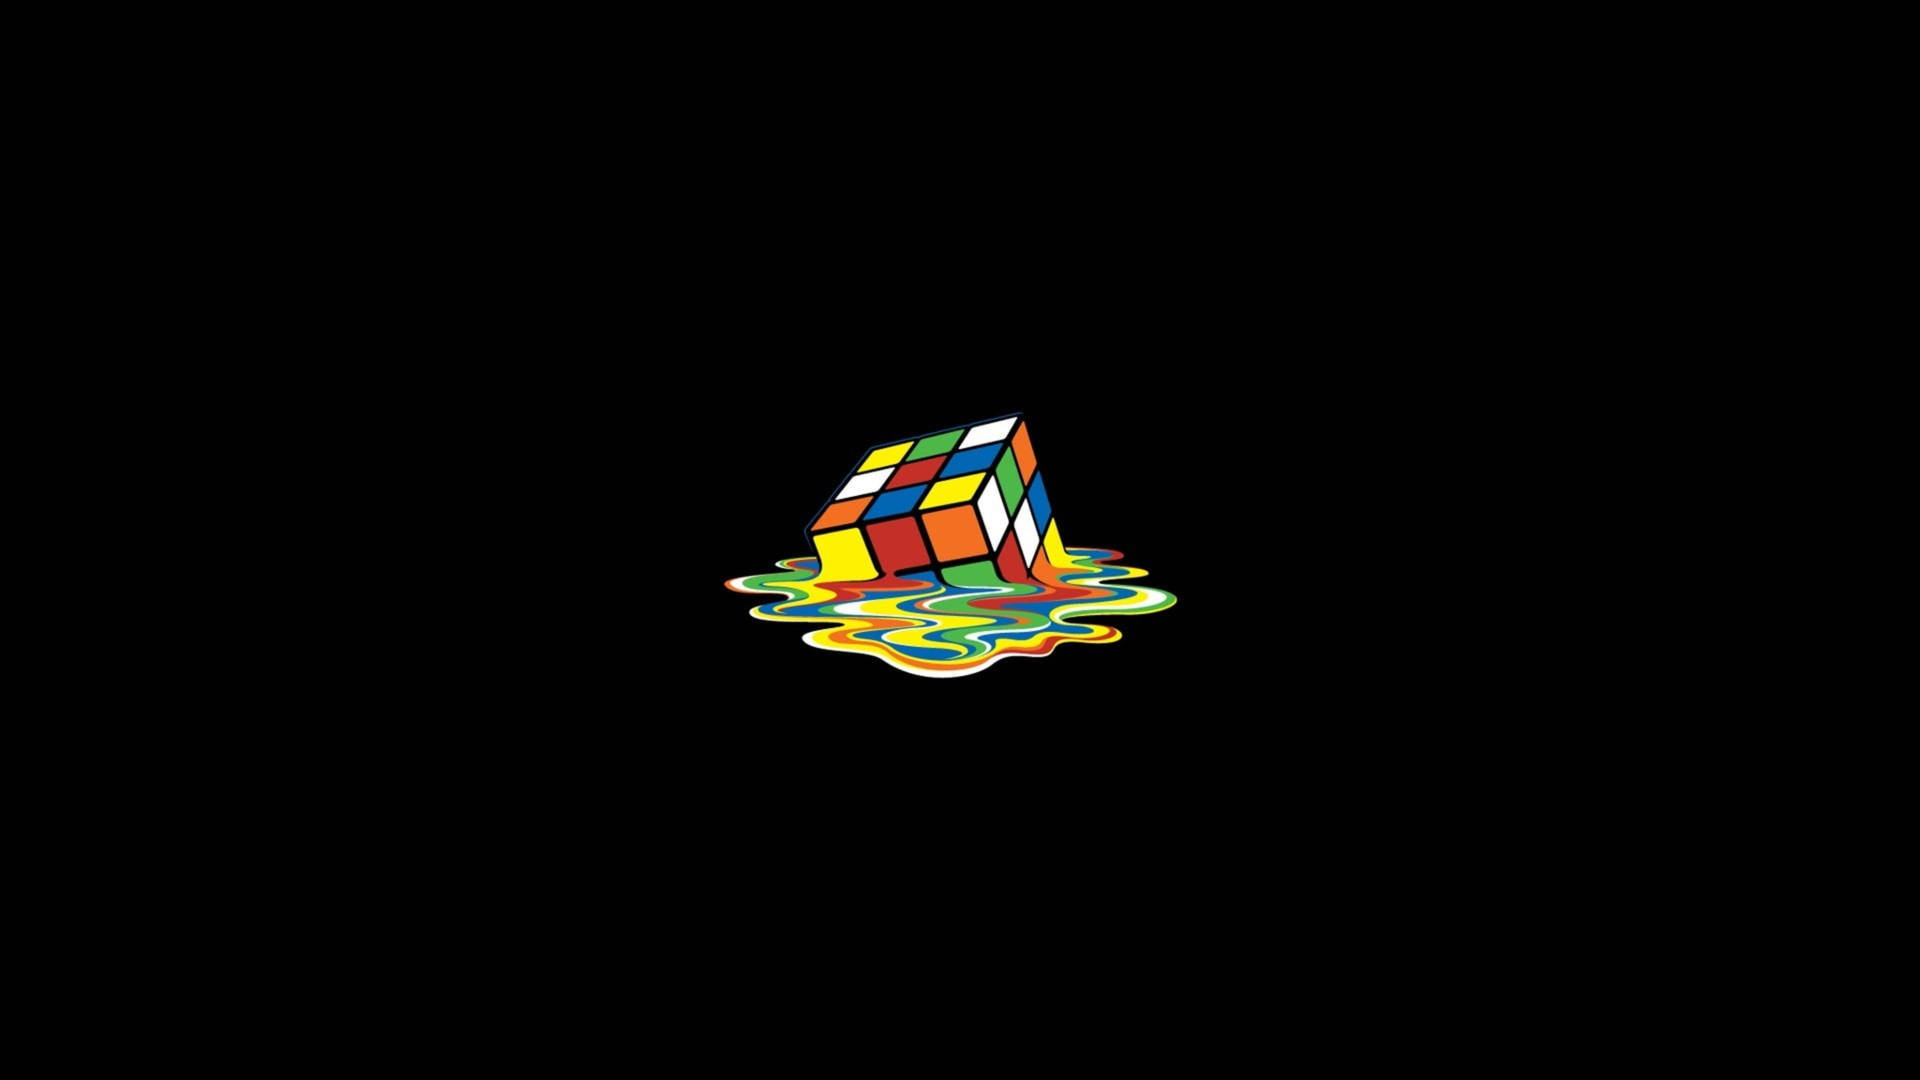 Melting Rubik's Cube Dark Abstract Background